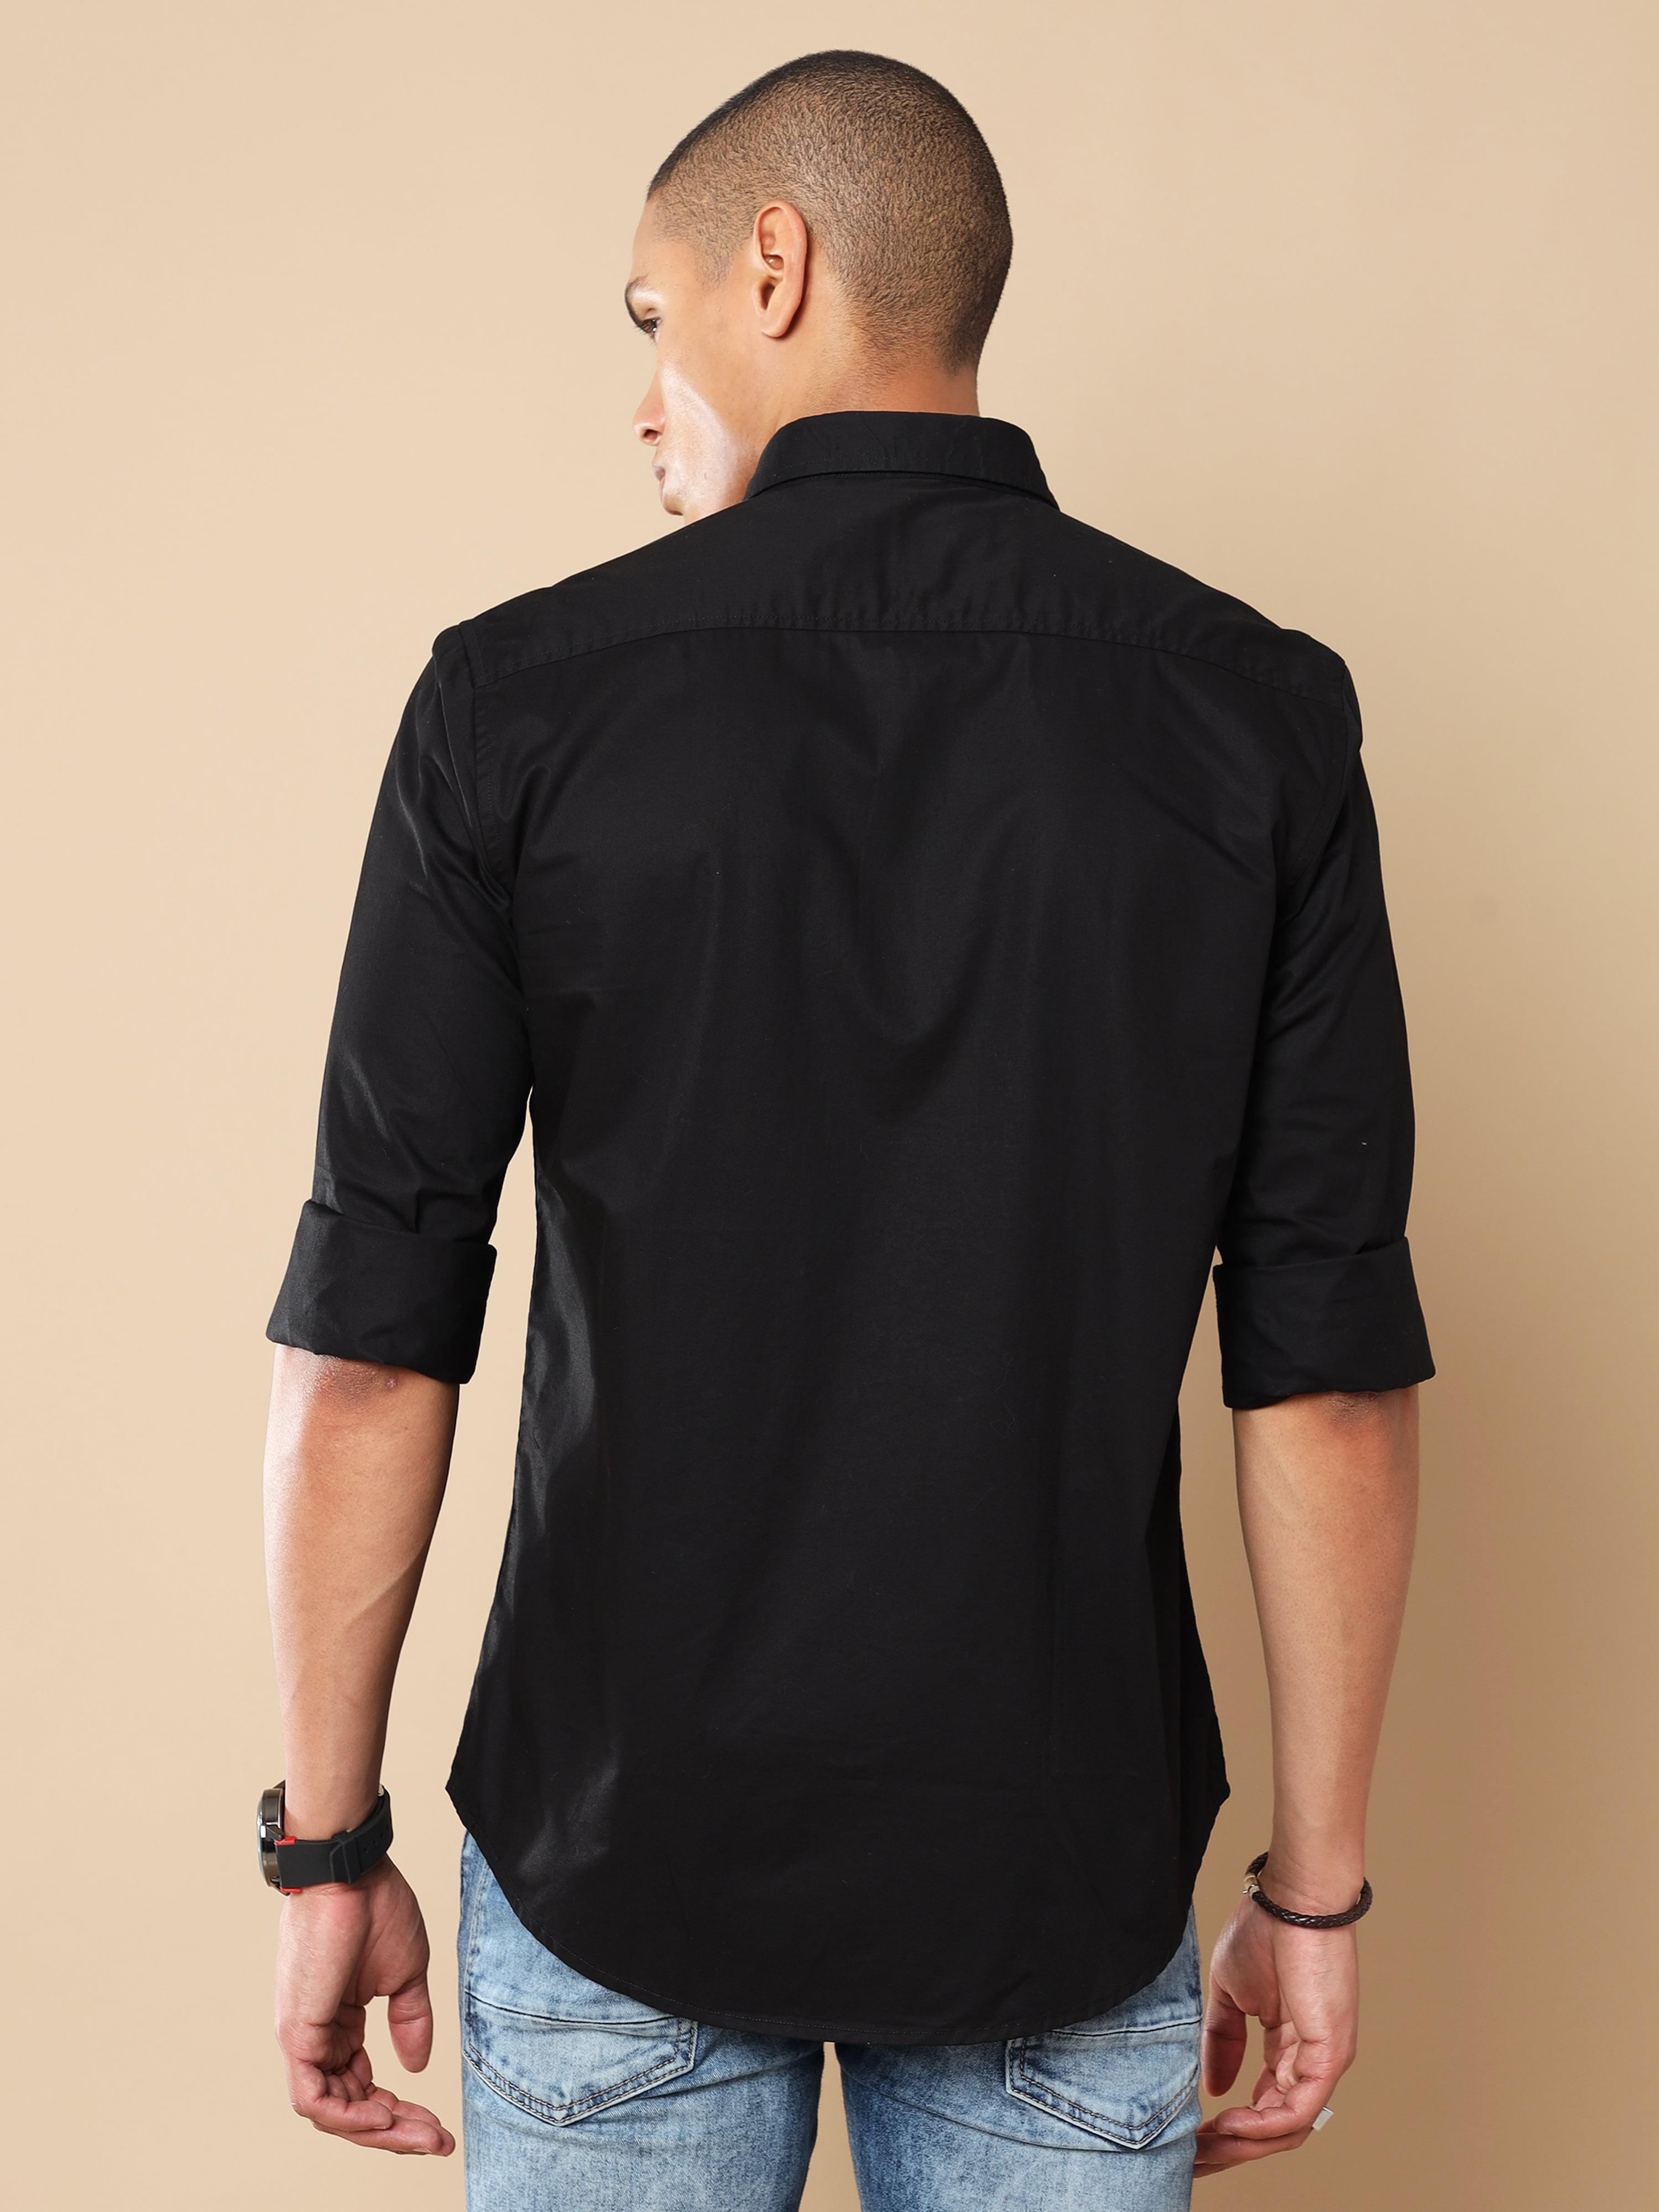 Double Pocket Cargo Shirts | Black Casual Cargo ShirtRs. 1499.00